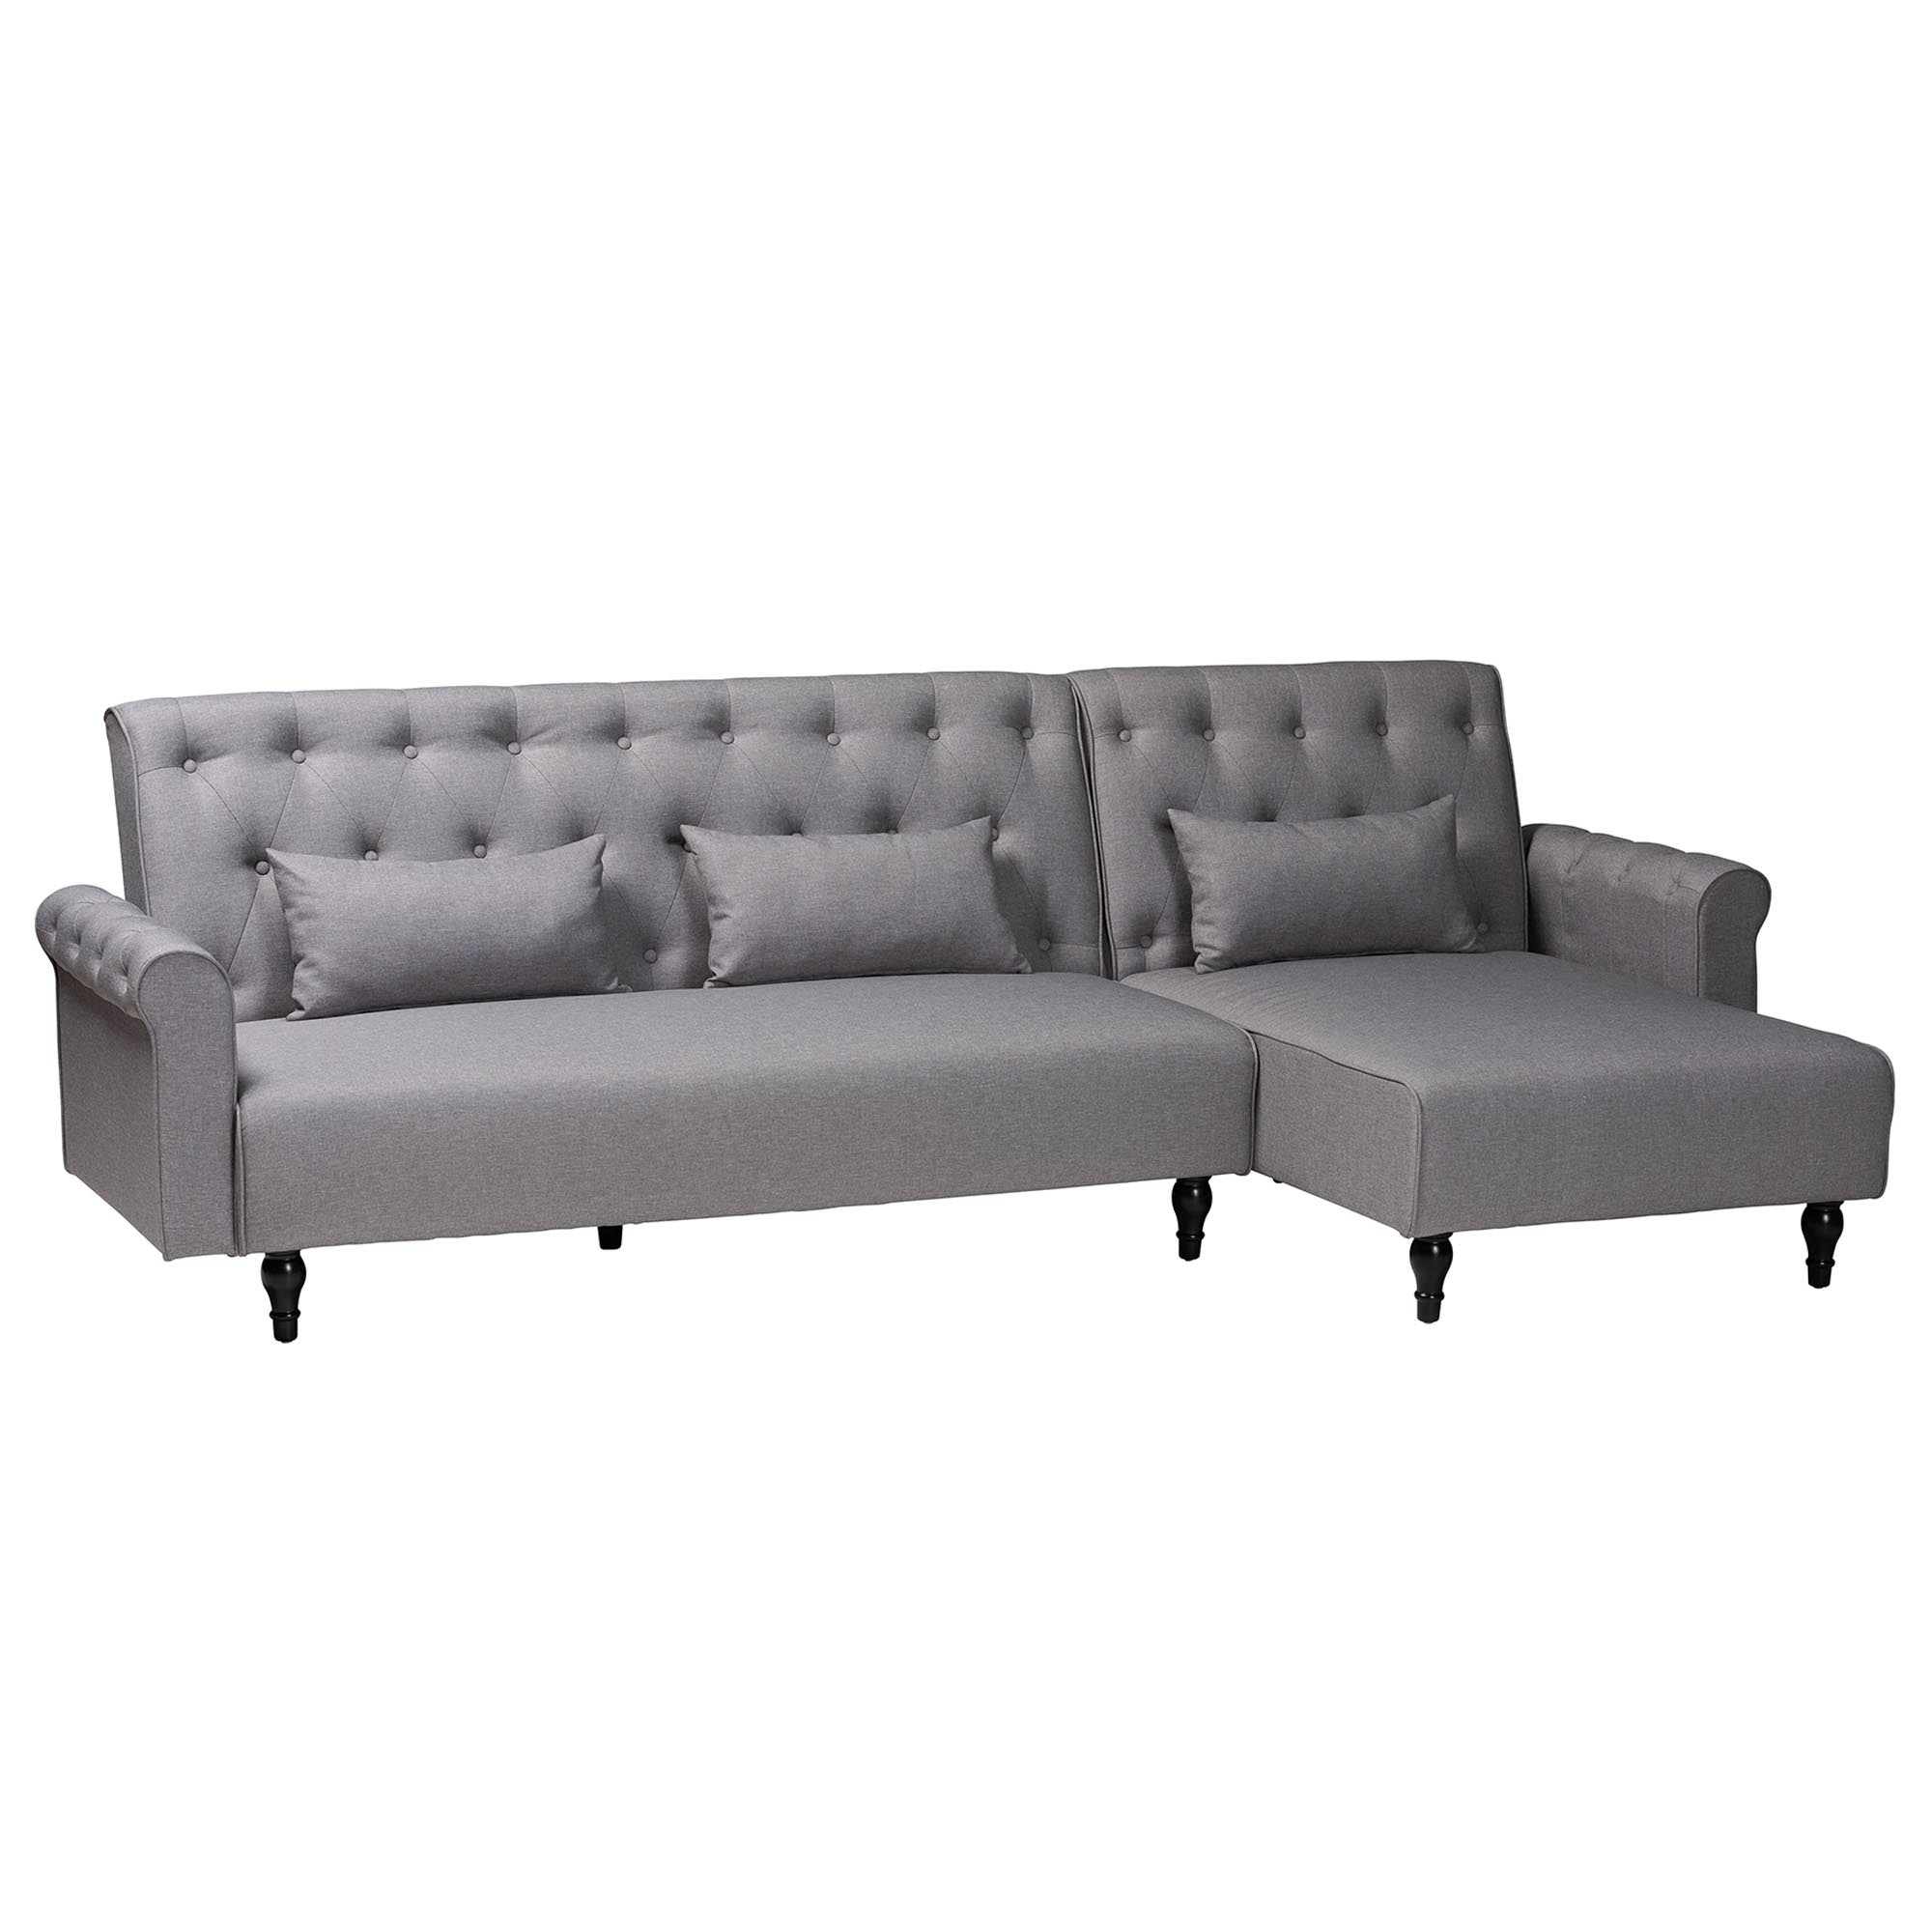 Baxton Studio Chesterfield Retro-Modern Slate Grey Fabric Upholstered Convertible Sleeper Sofa